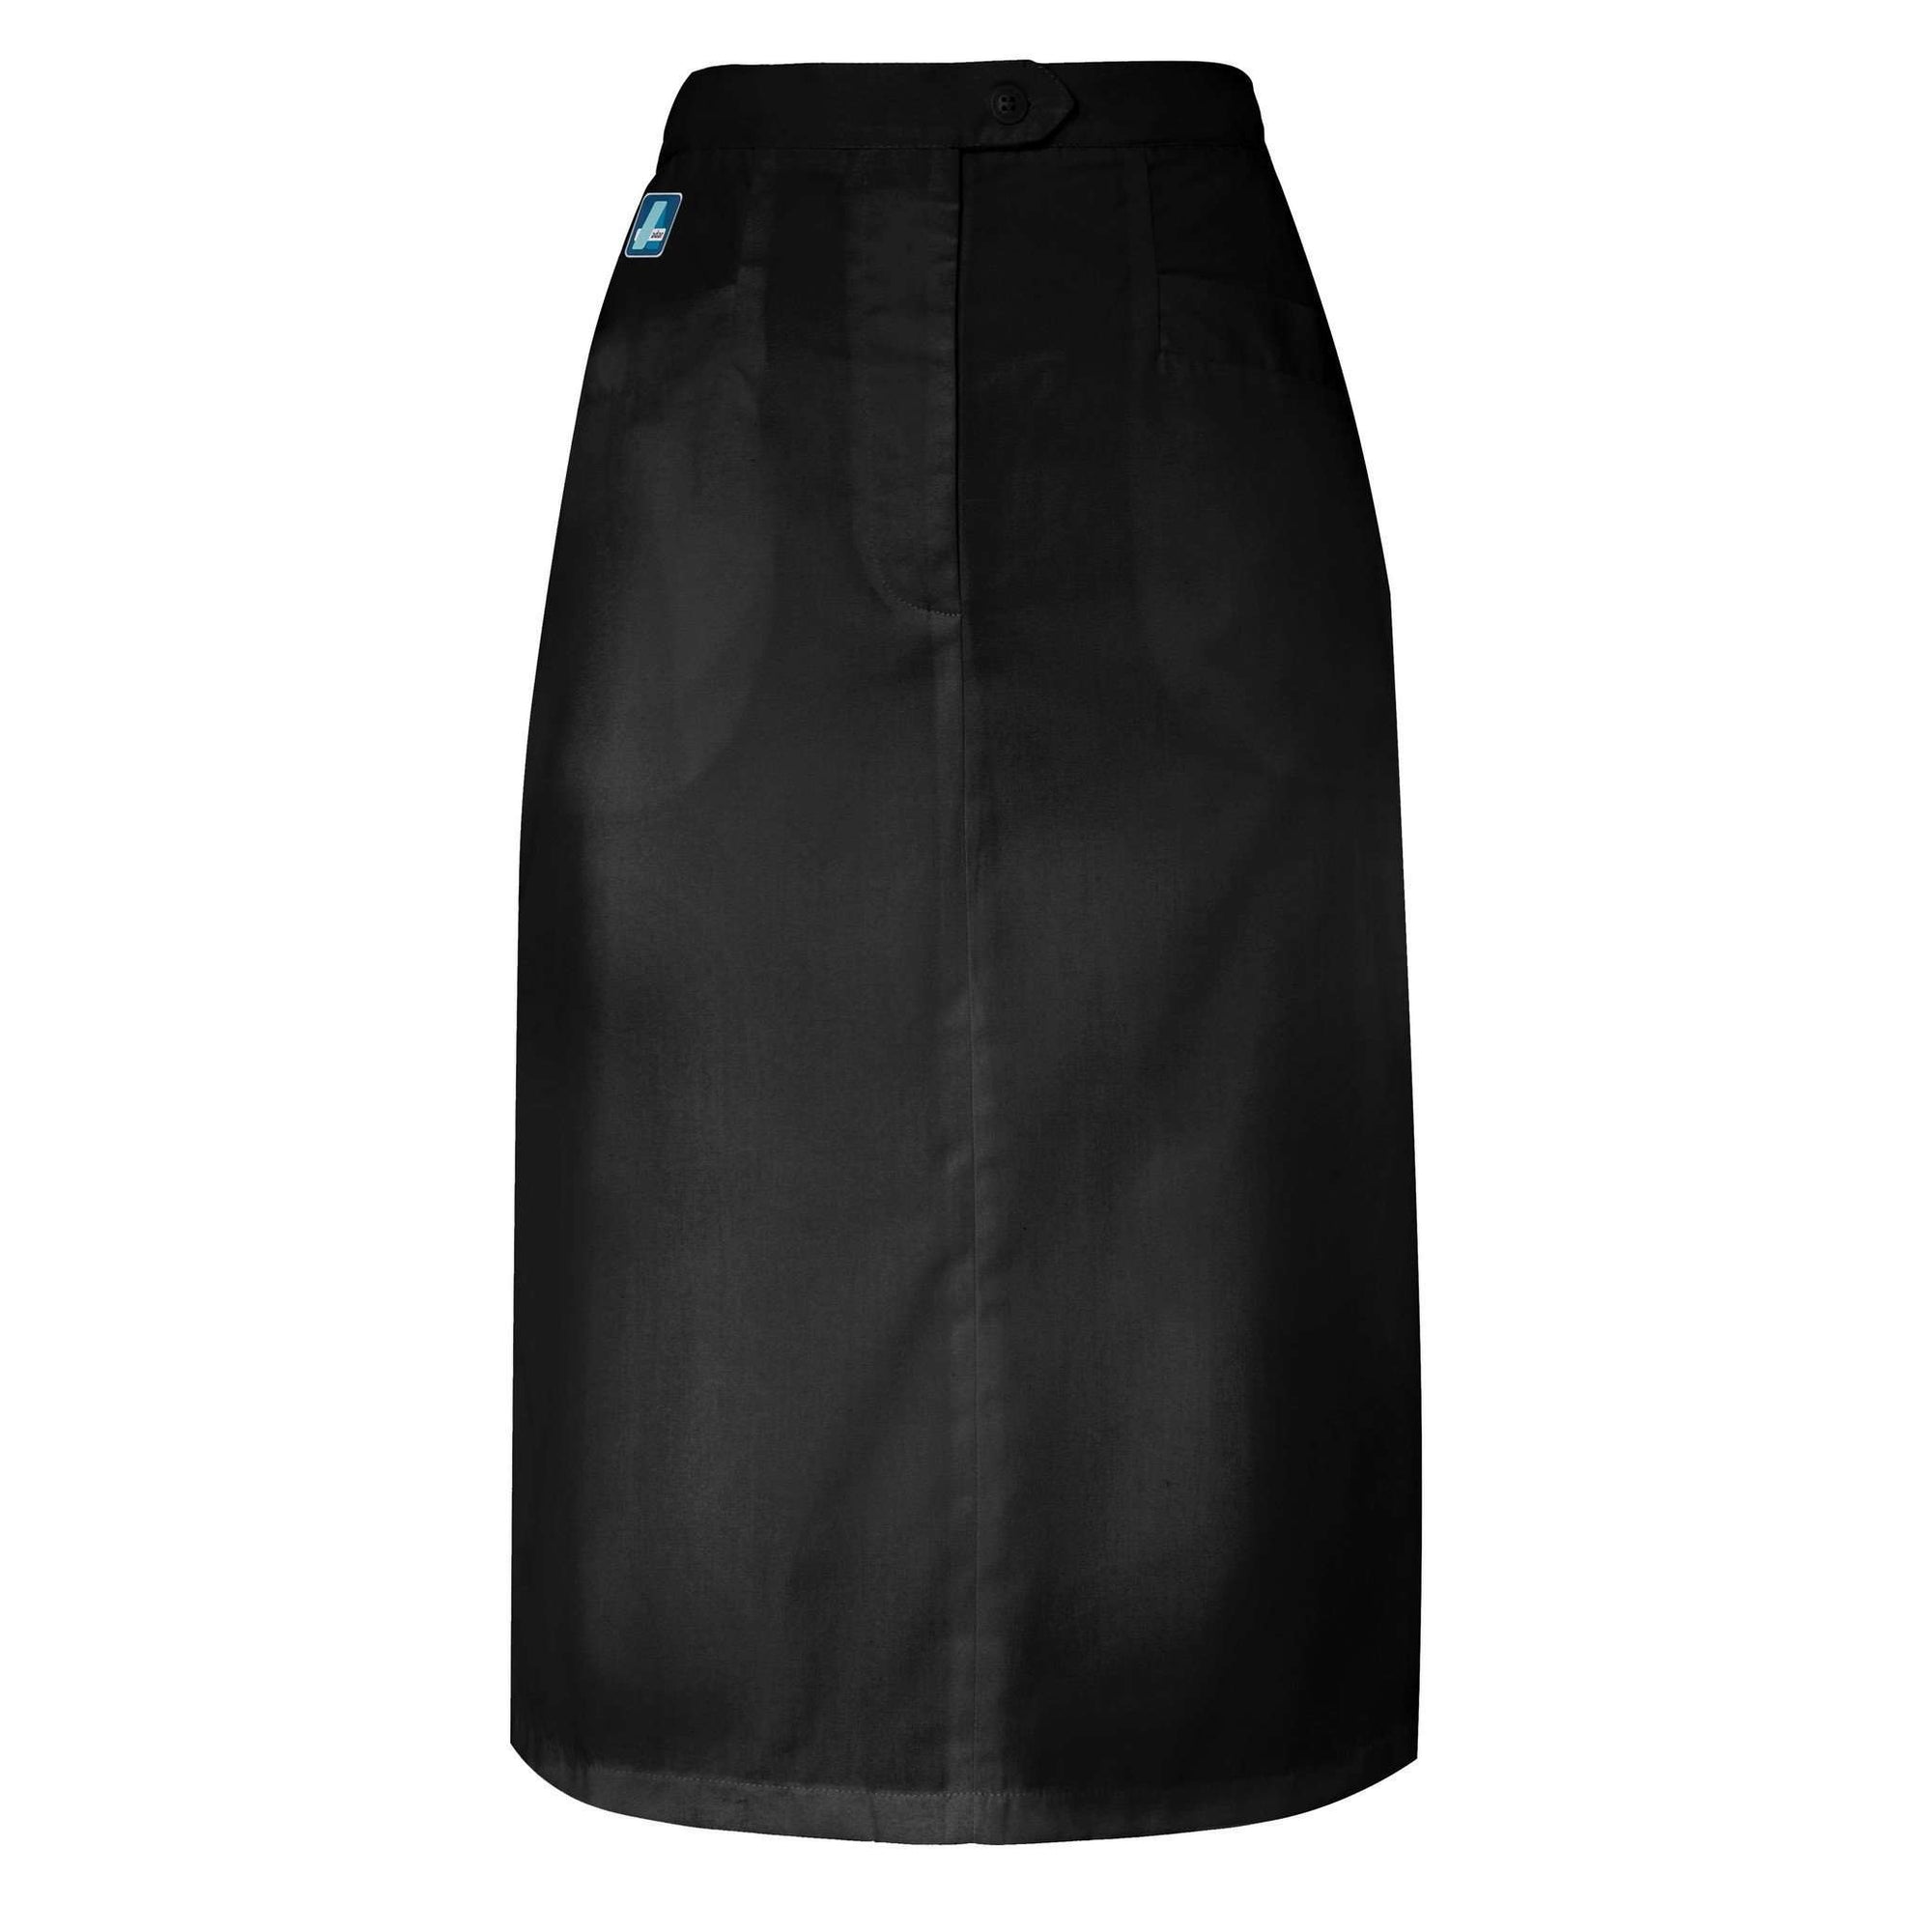  Adar - uniforms Medical Uniform Skirts uniforms online Adar Universal Mid-Calf Length Angle Pocket Skirt - SchoolUniforms.com